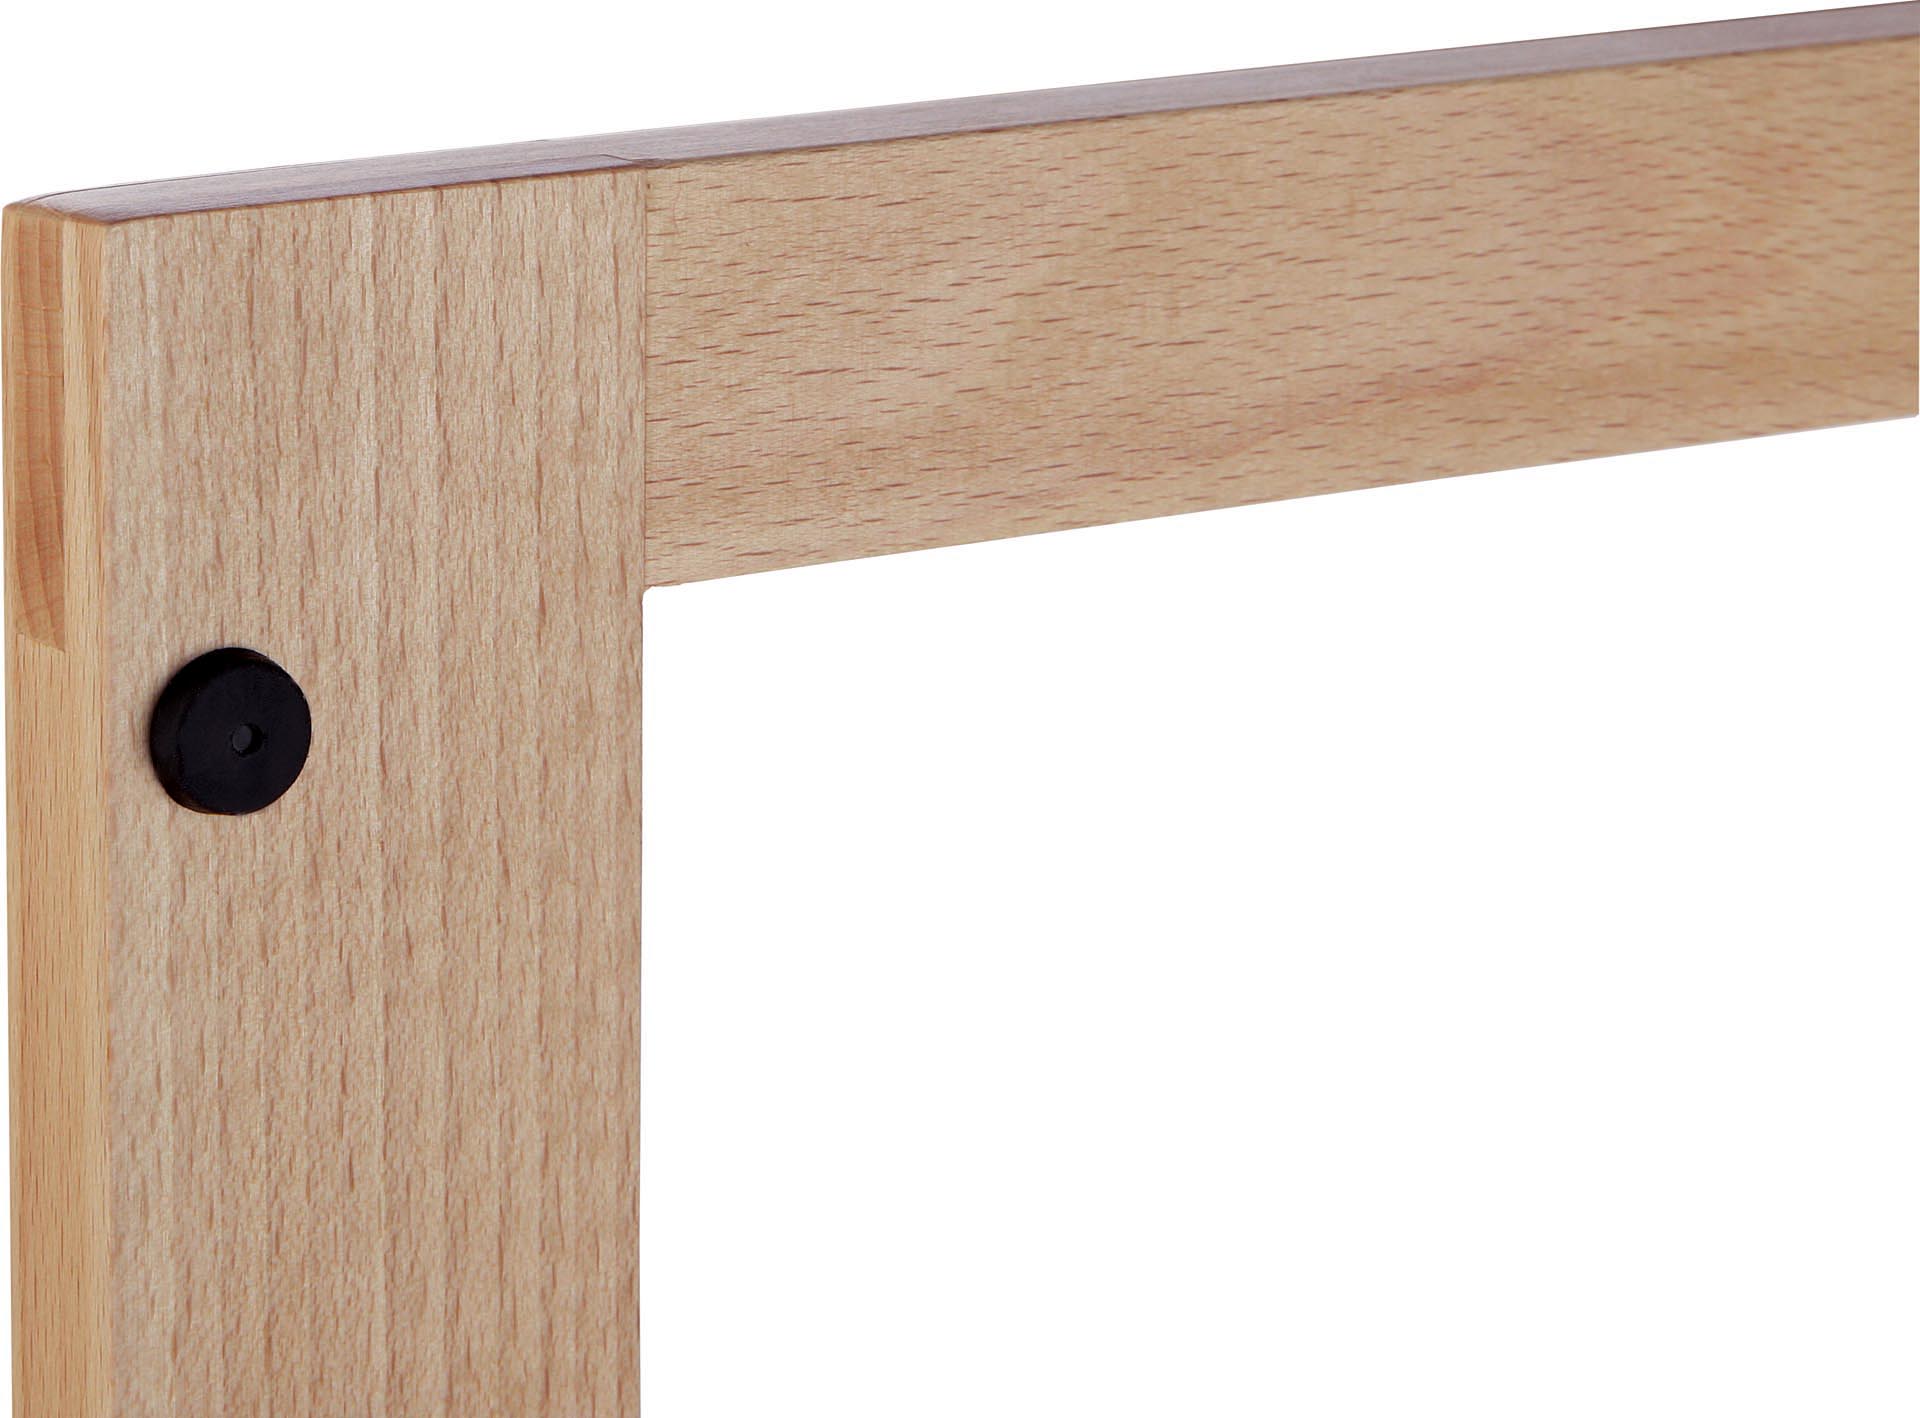 Basiselement "Wood" 65 mm # 155501